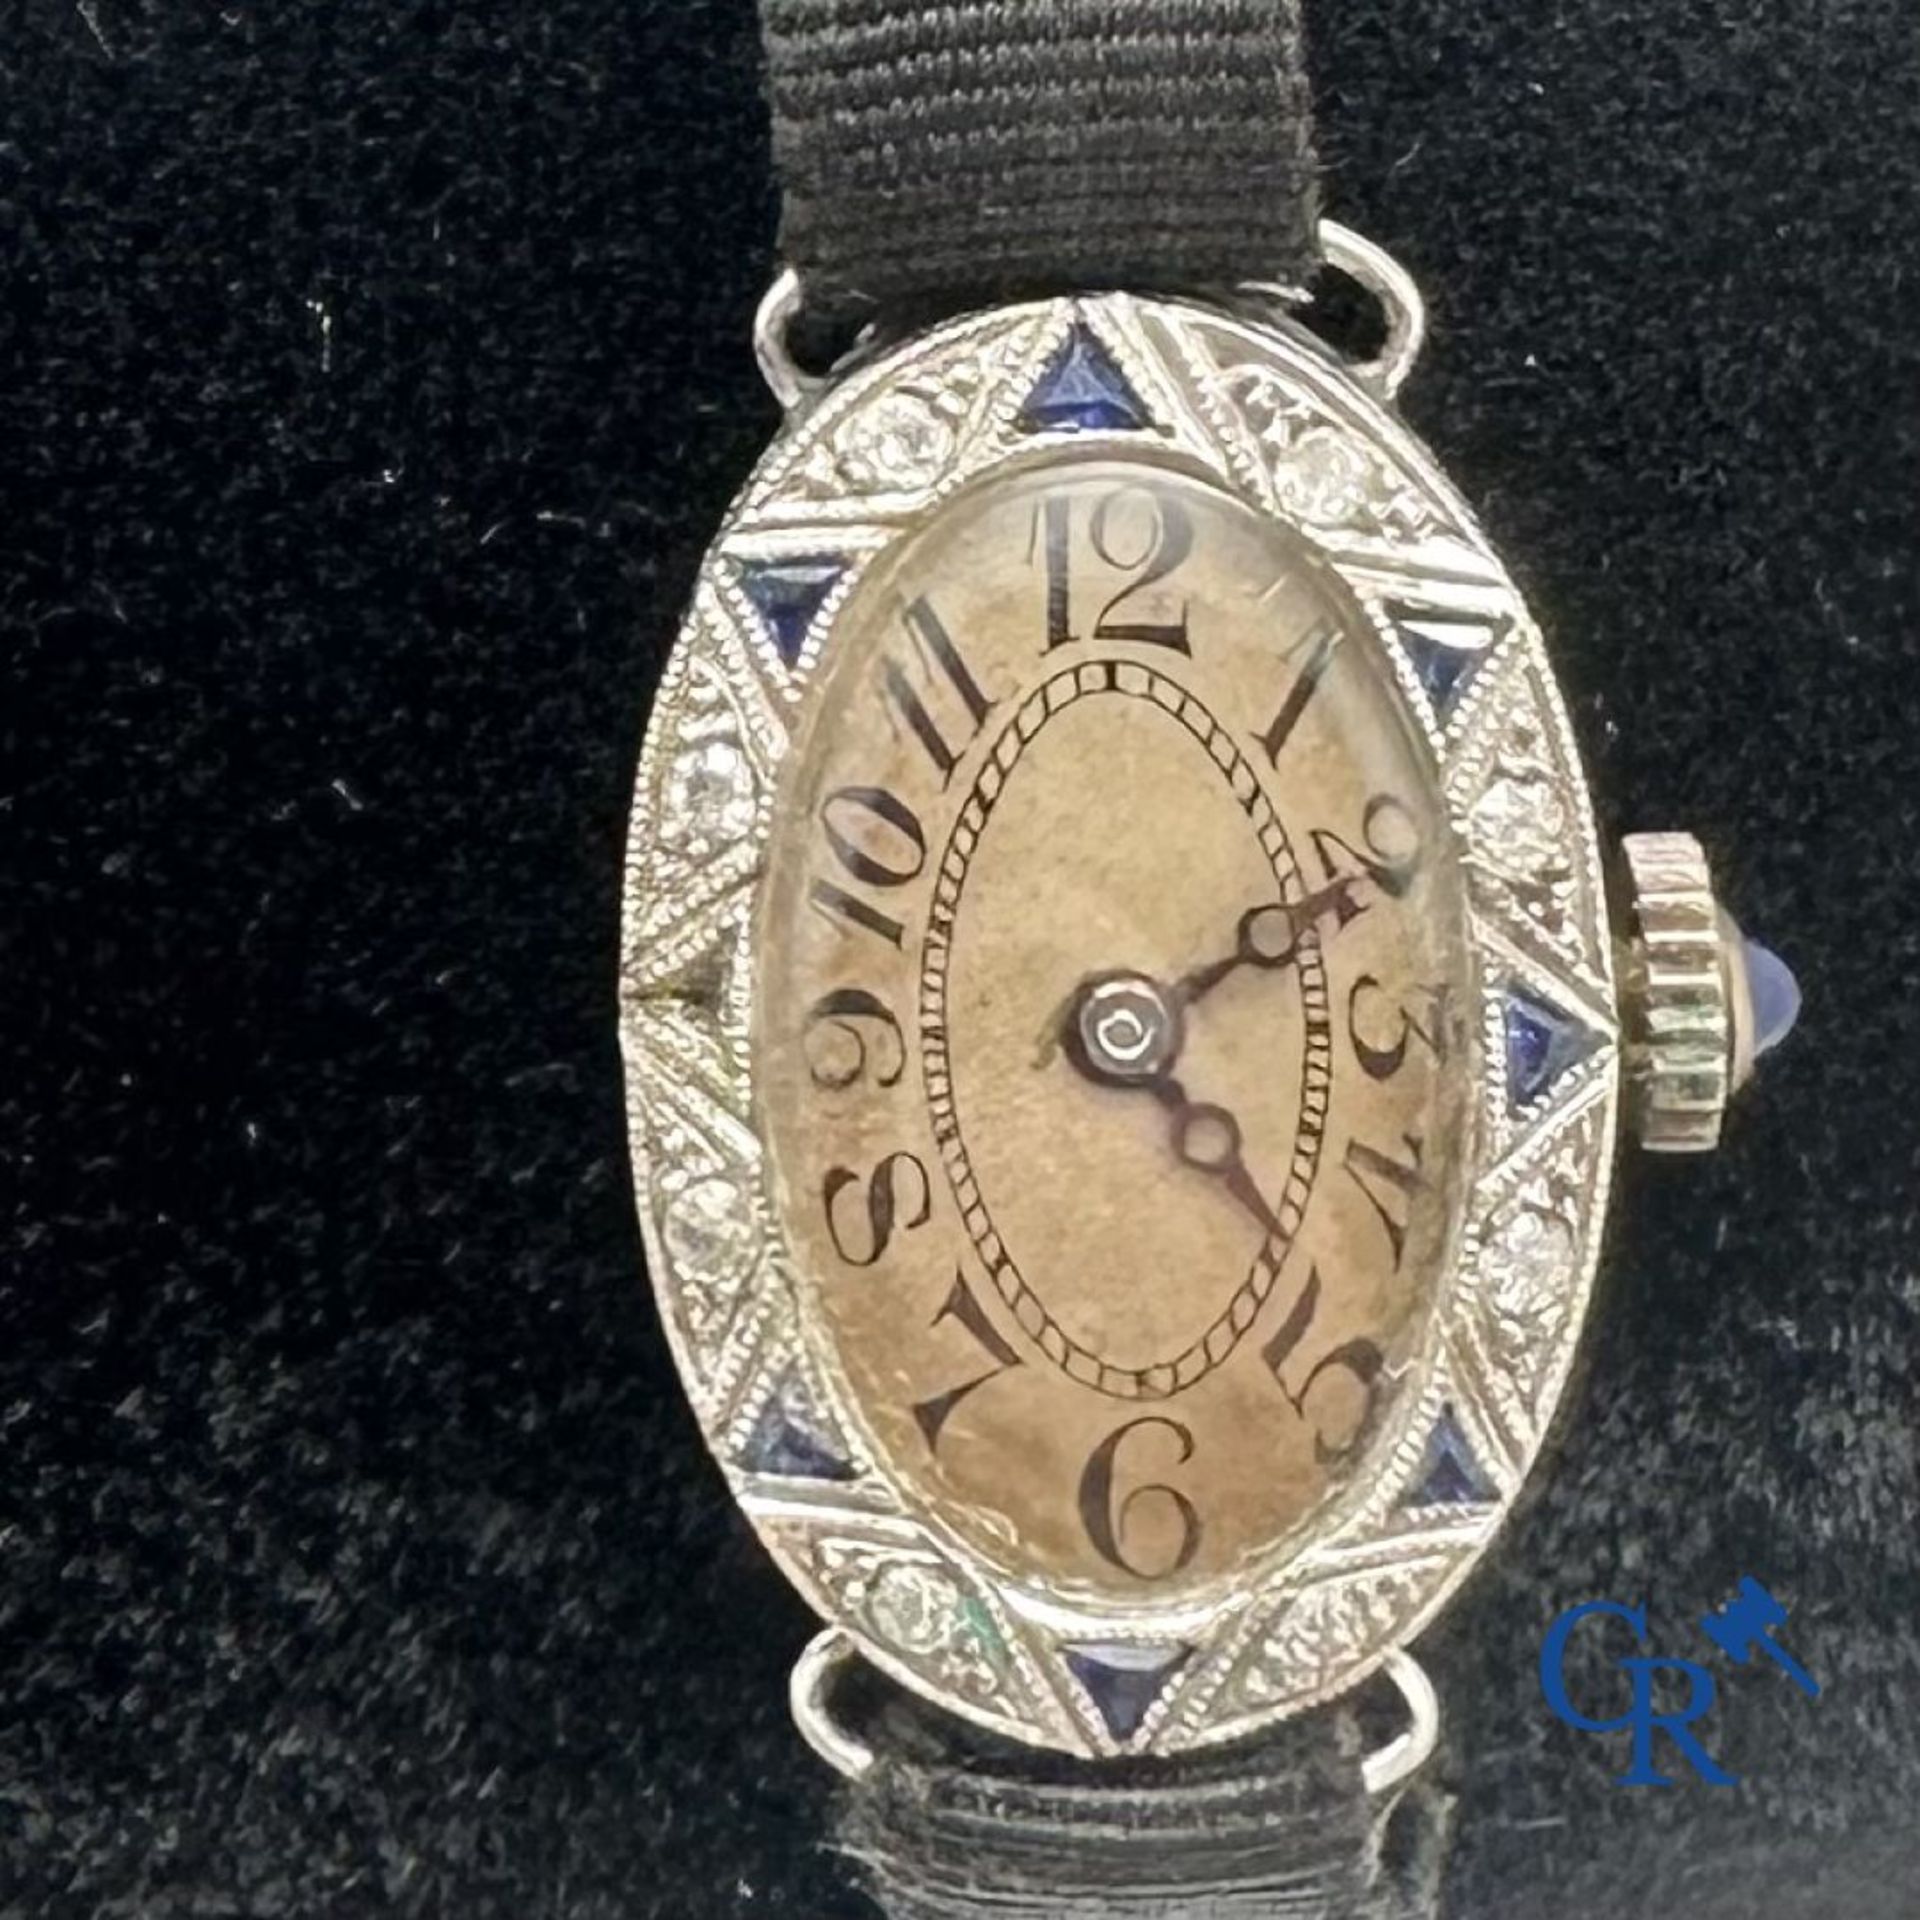 Jewellery - Timepiece: Art Deco ladies watch in Platinum. - Image 3 of 4